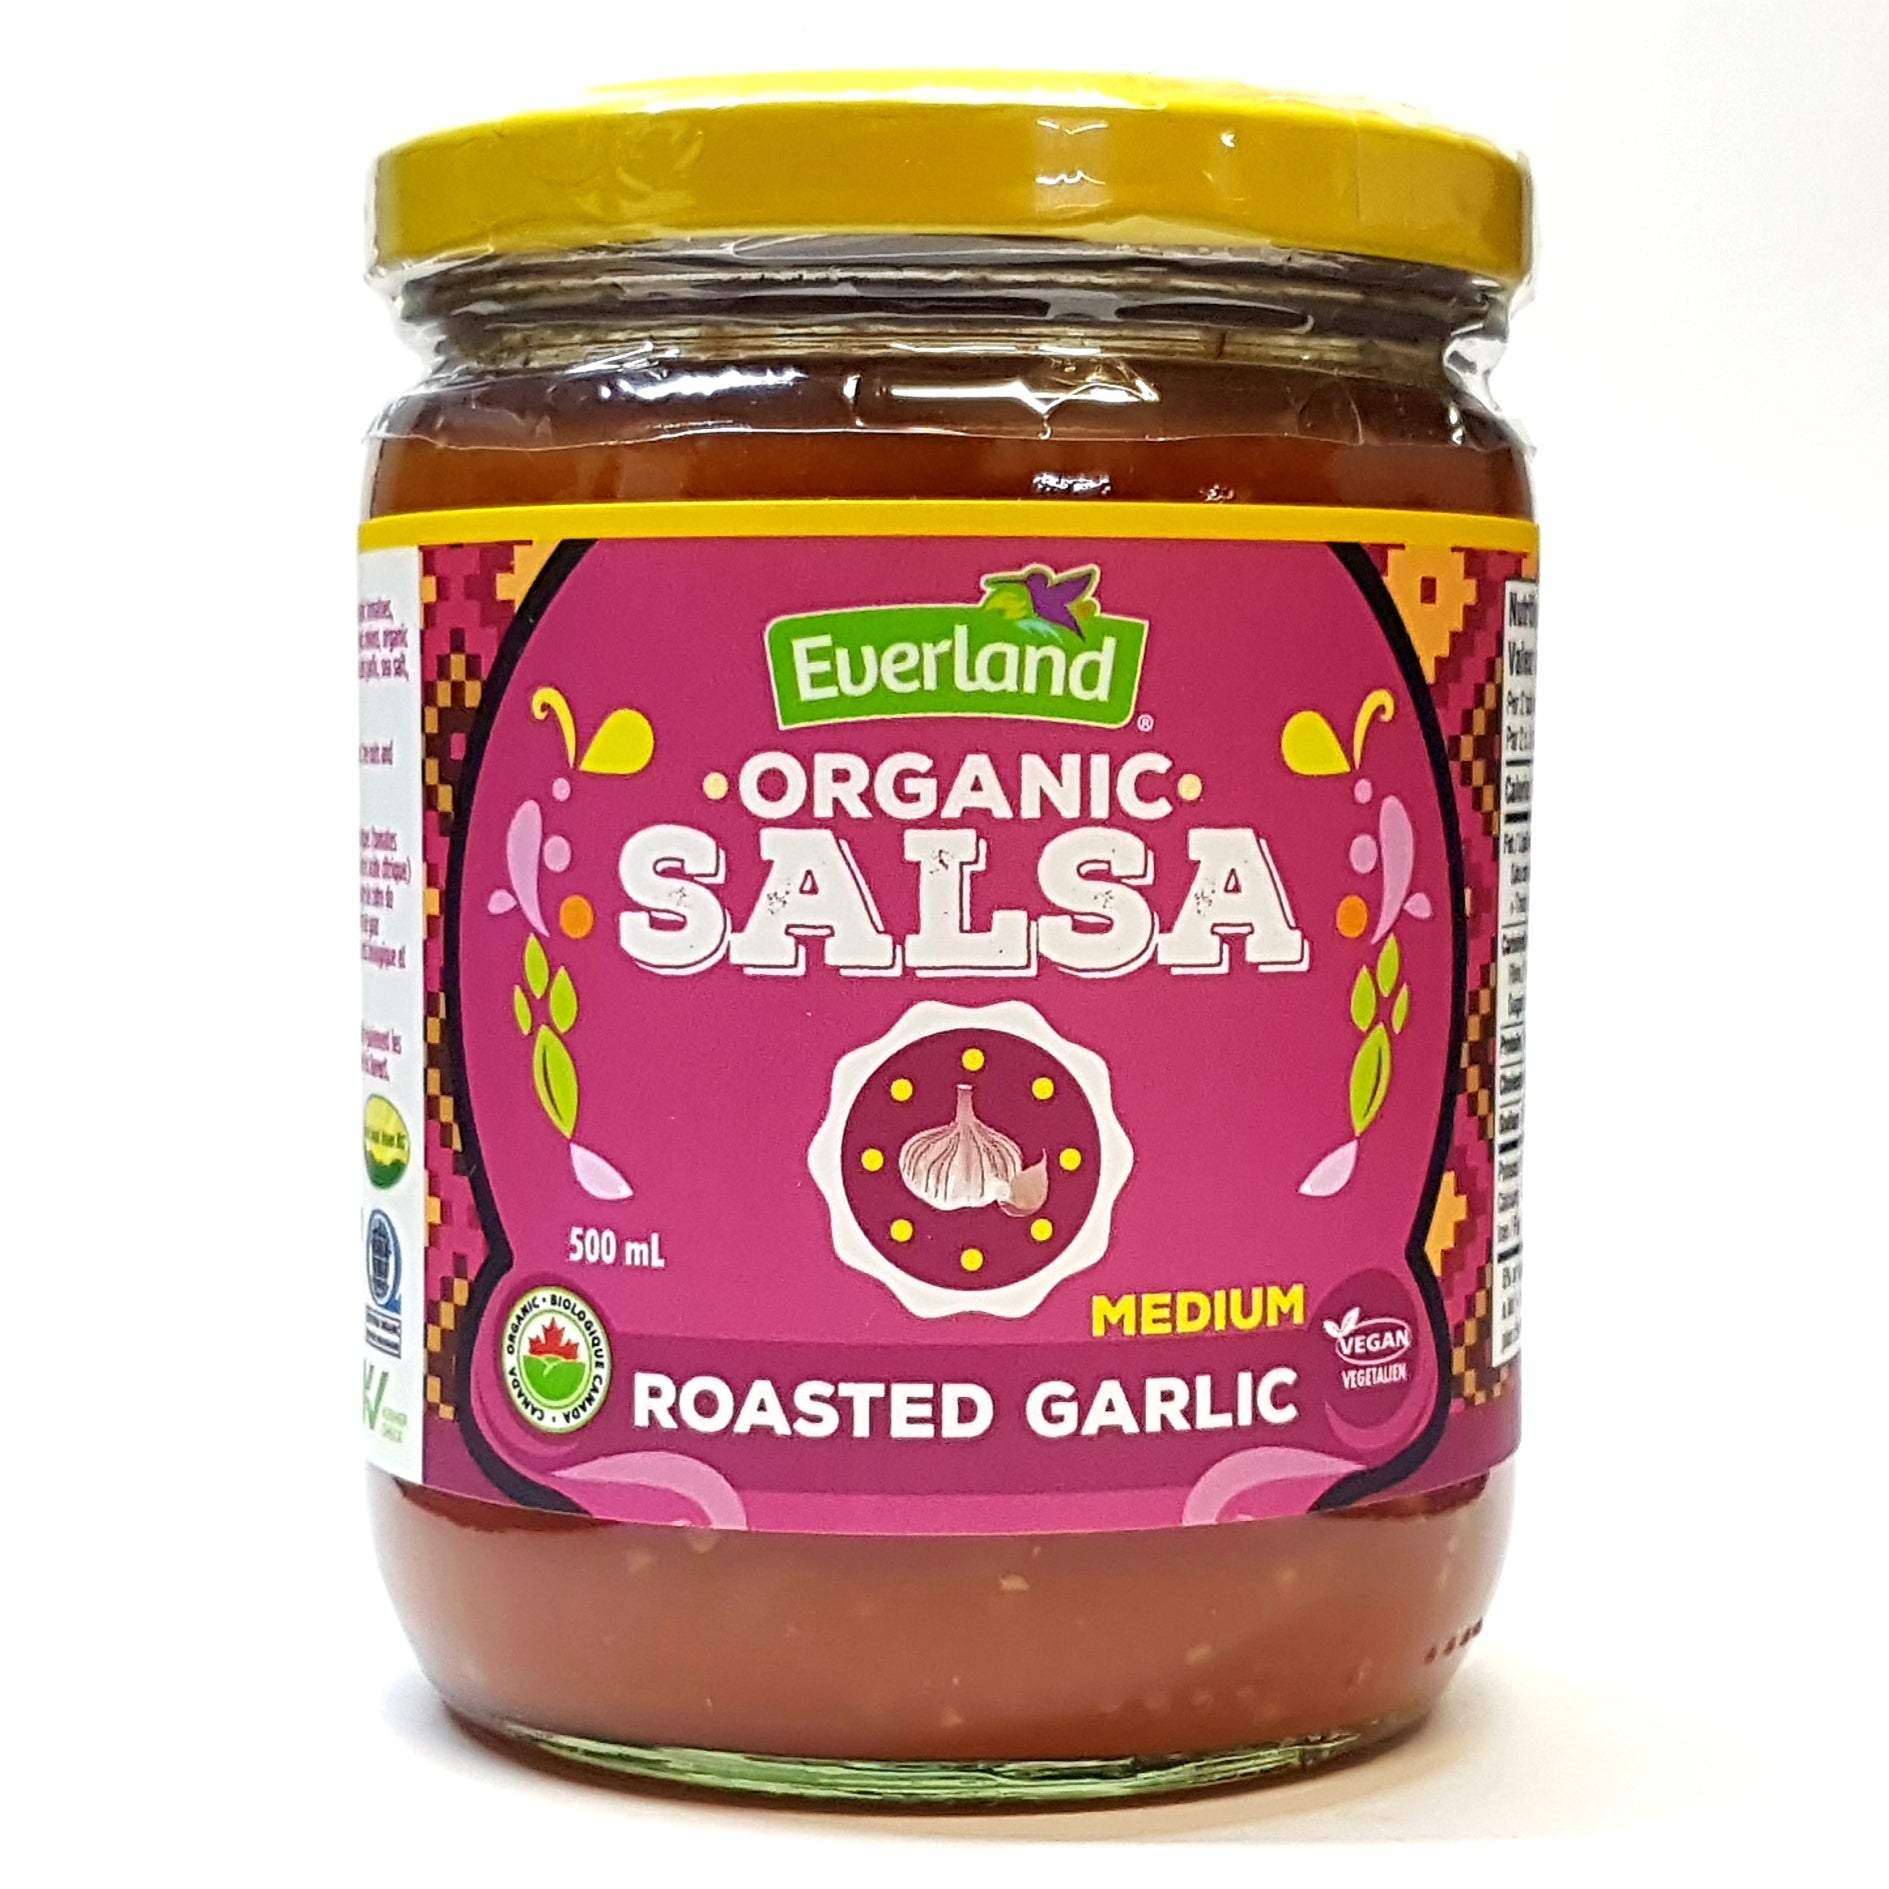 Everland Organic Salsa - Roasted Garlic (500ml) - Lifestyle Markets